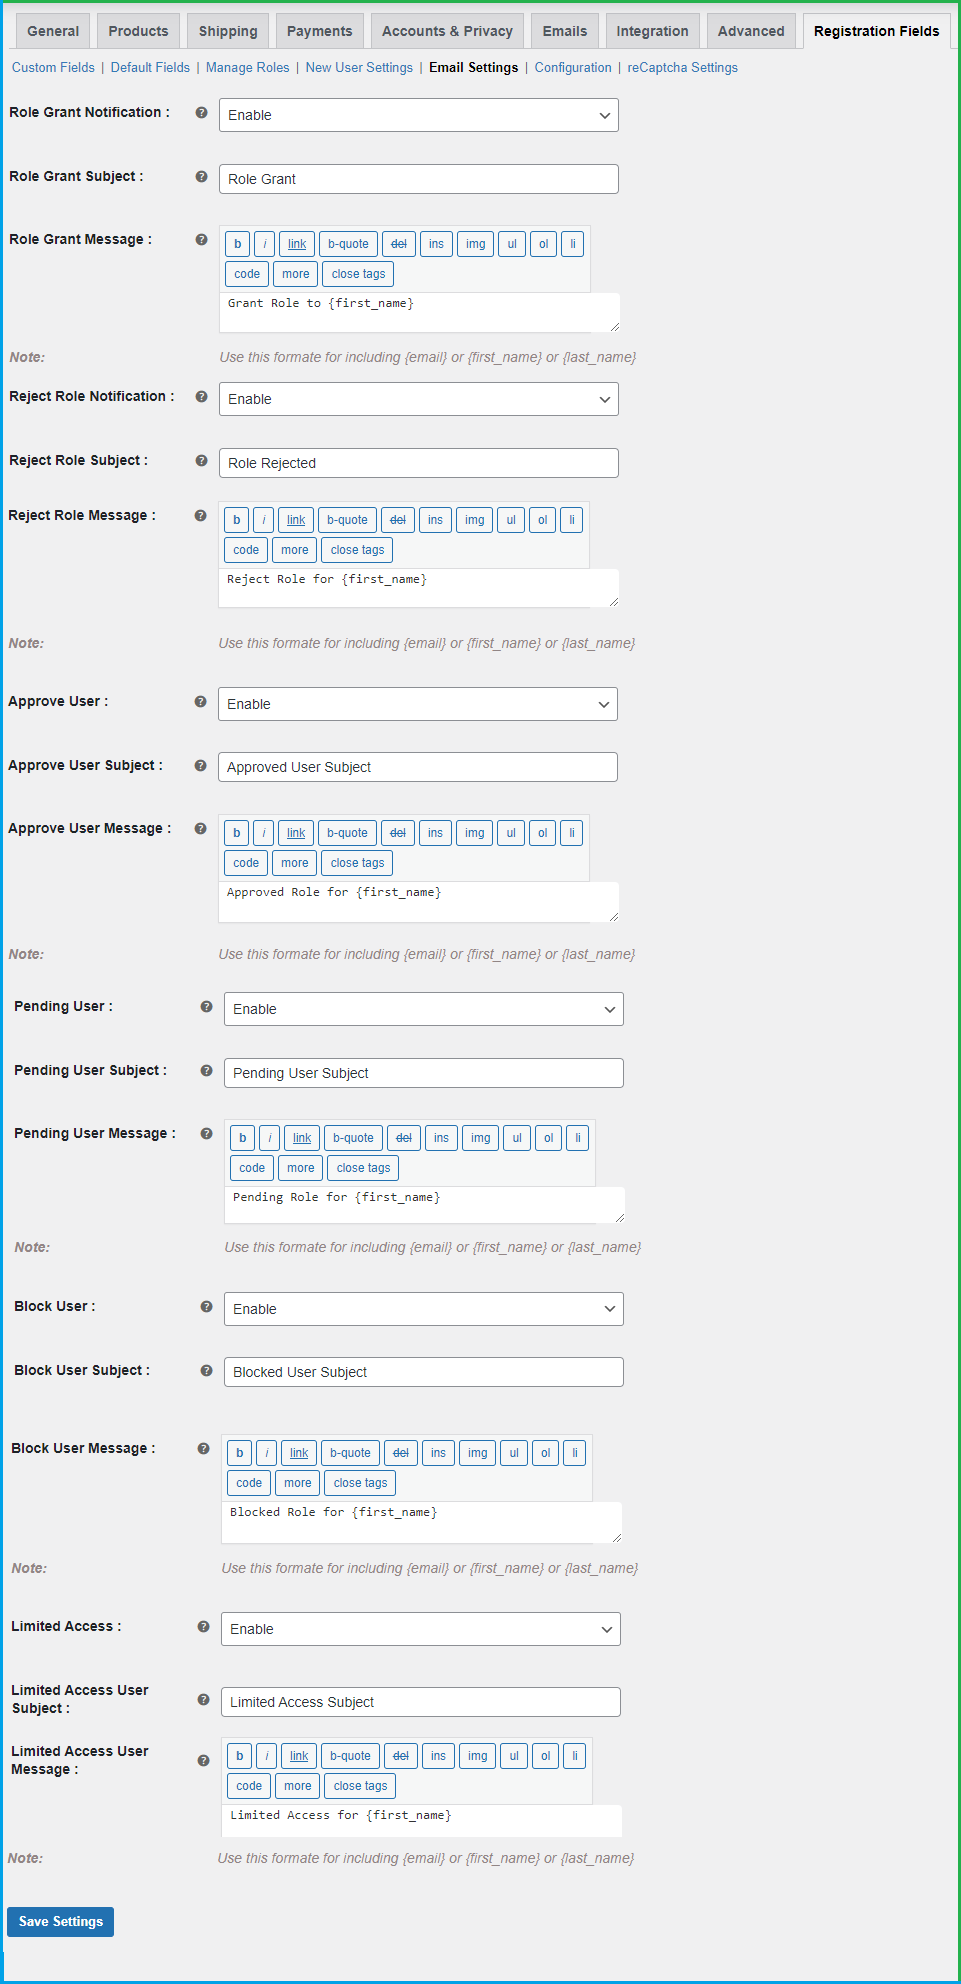 WooCommerce registration fields - Custom Emails